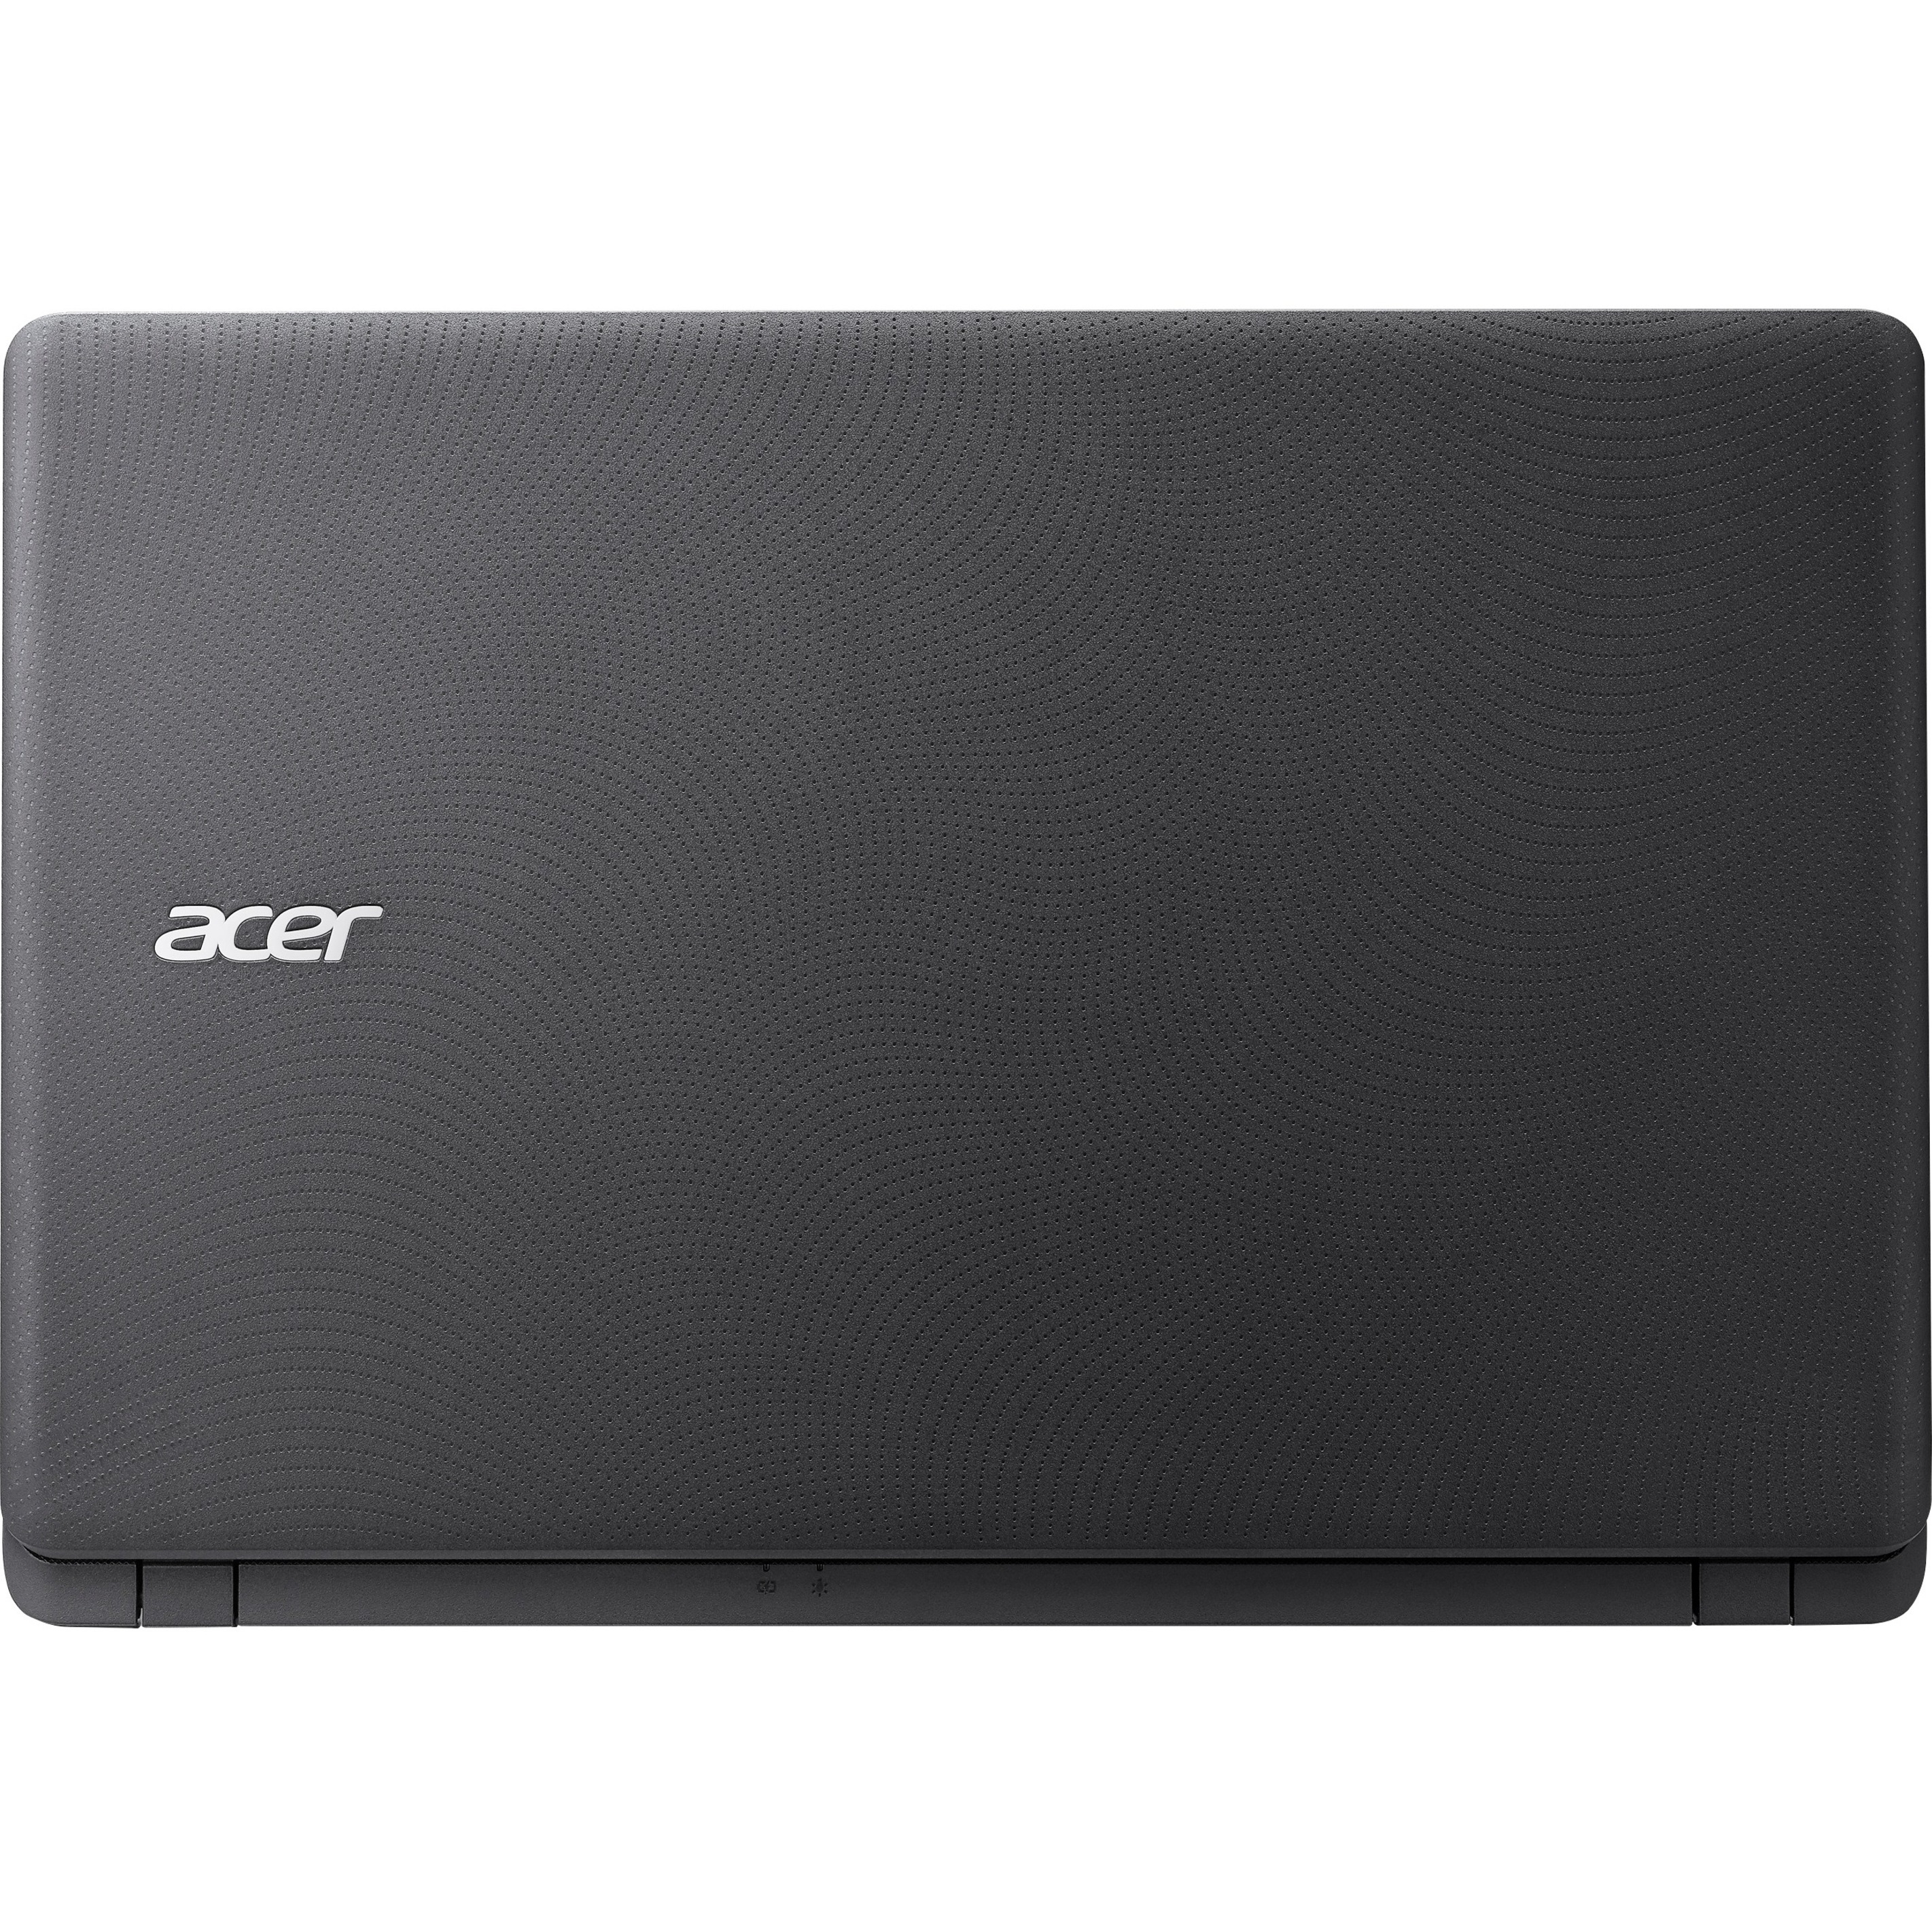 Acer Aspire 15.6" Laptop, Intel Core i3 i3-6100U, 1TB HD, DVD Writer, Windows 10 Home, ES1-572-31XL - image 5 of 5